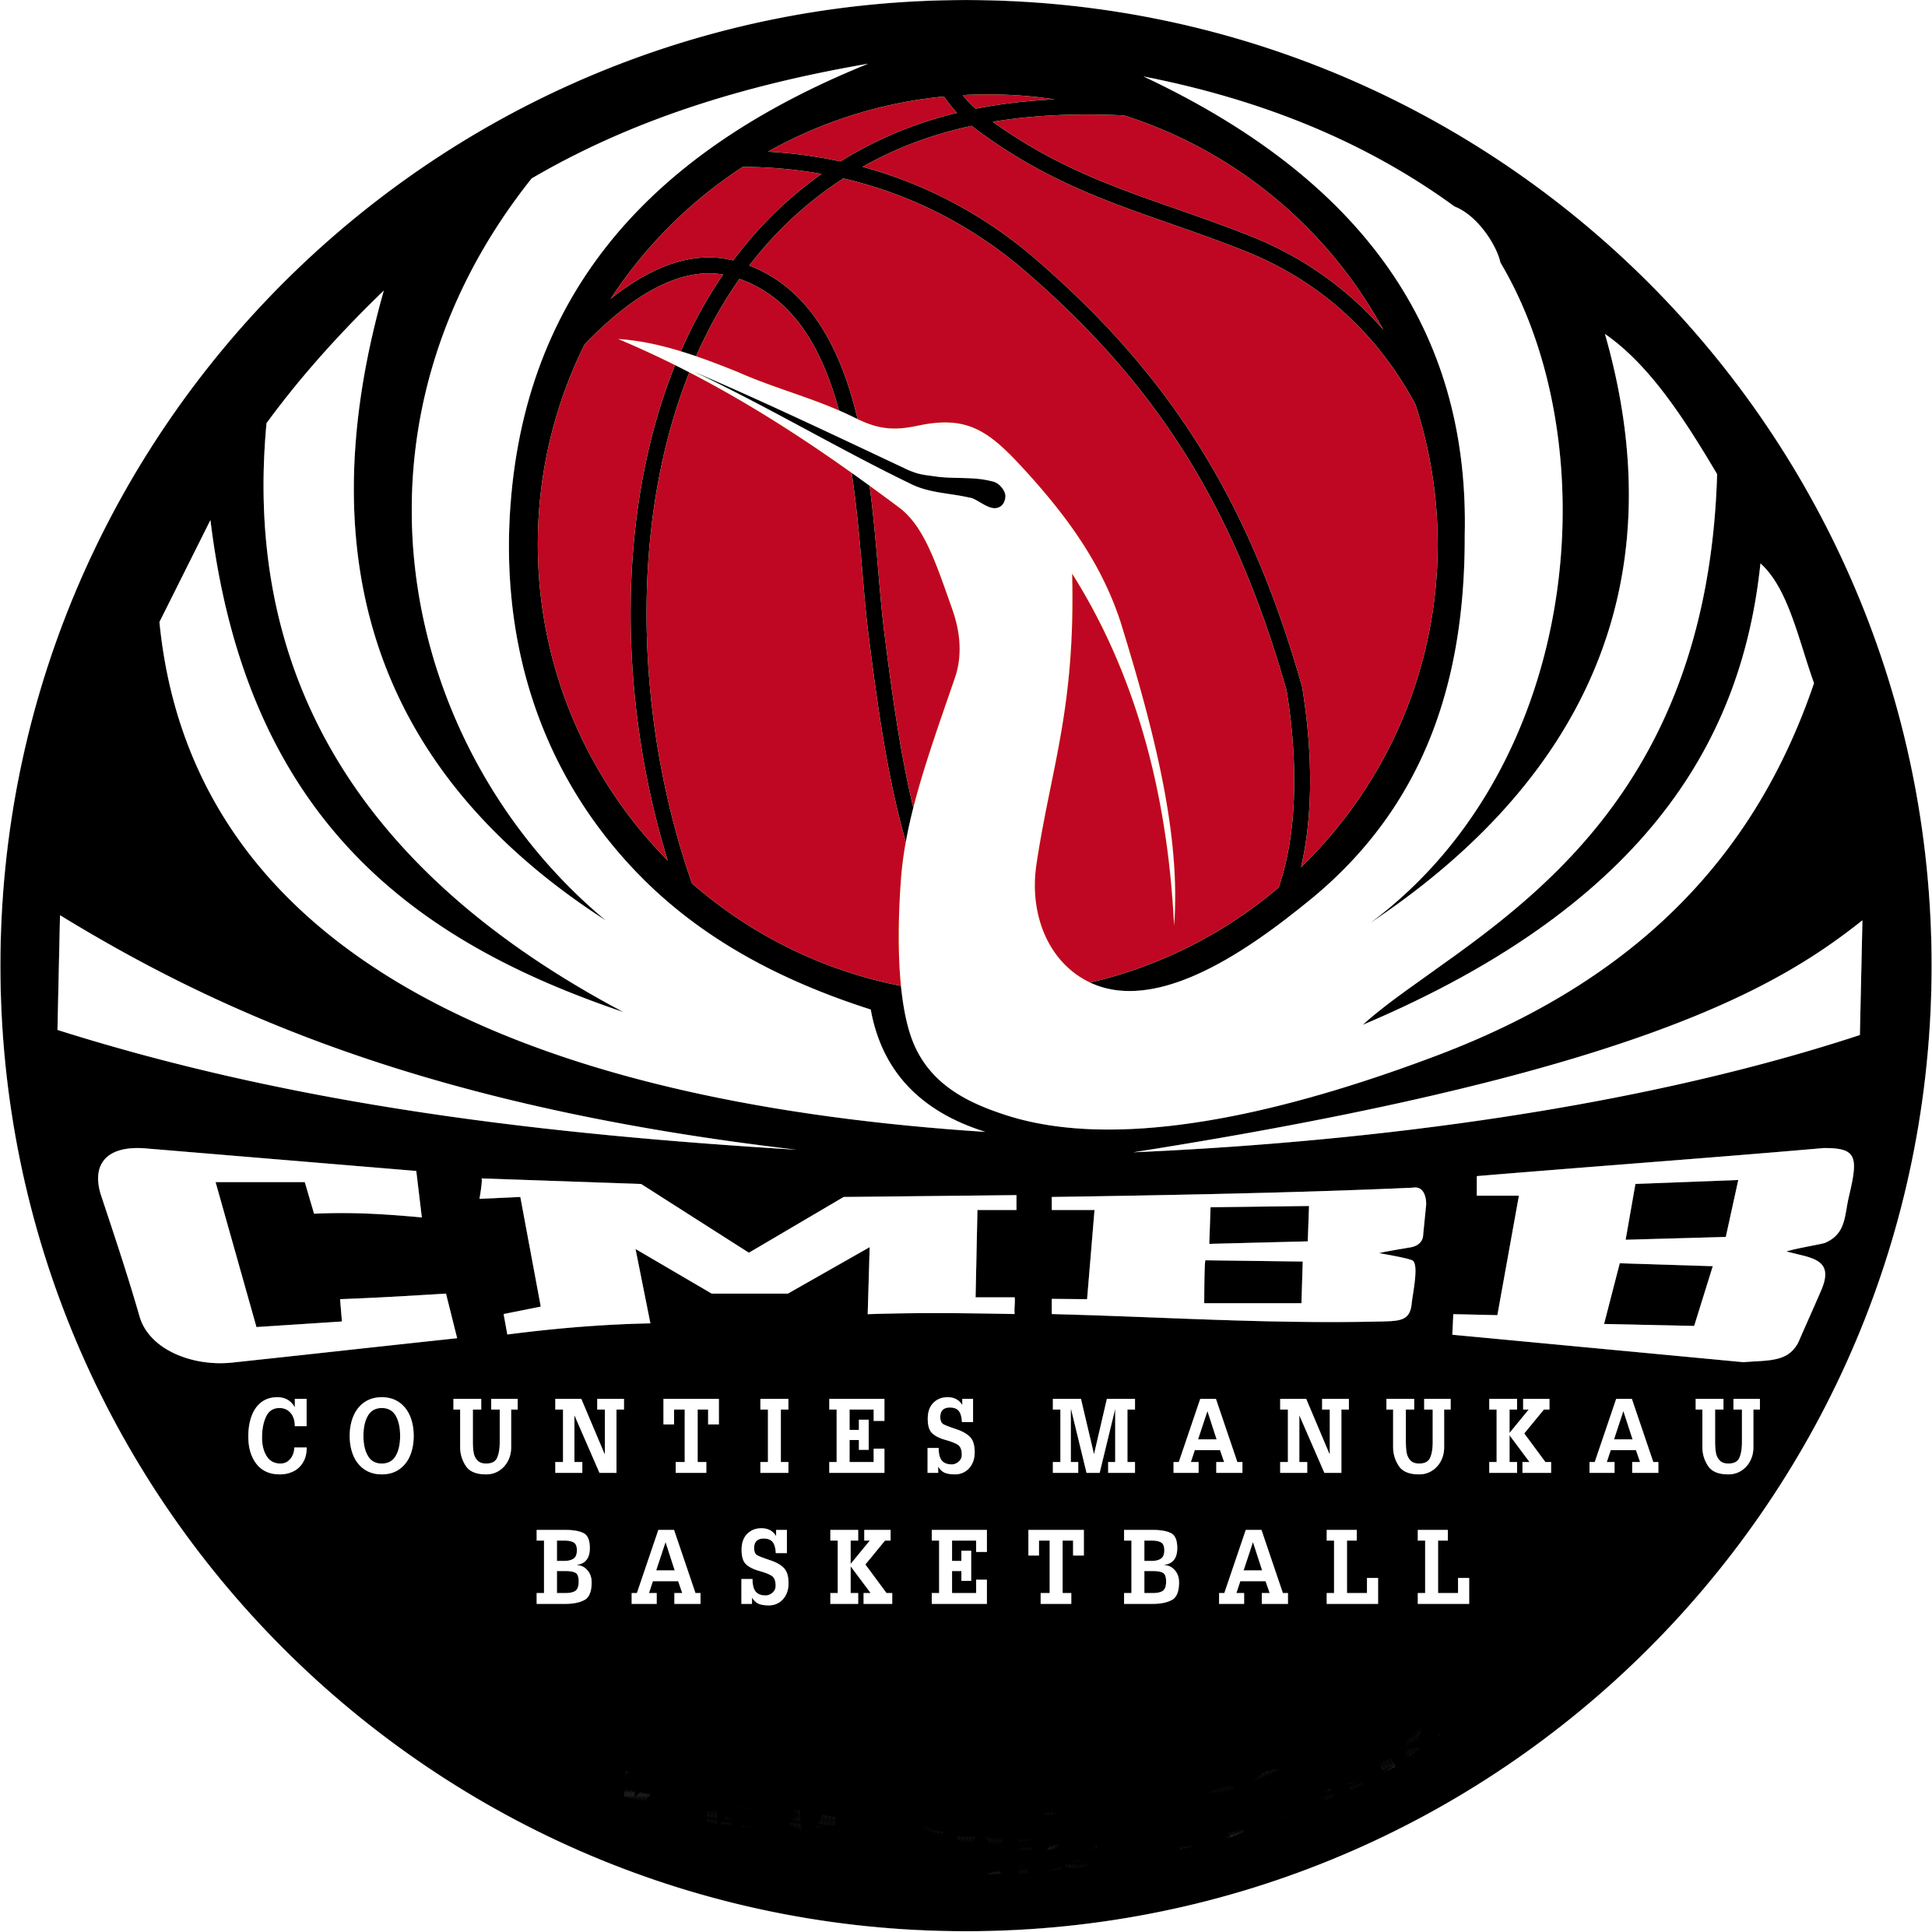 Counties Manukau Basketball - Counties Manukau Basketball Logo (2482x2482)